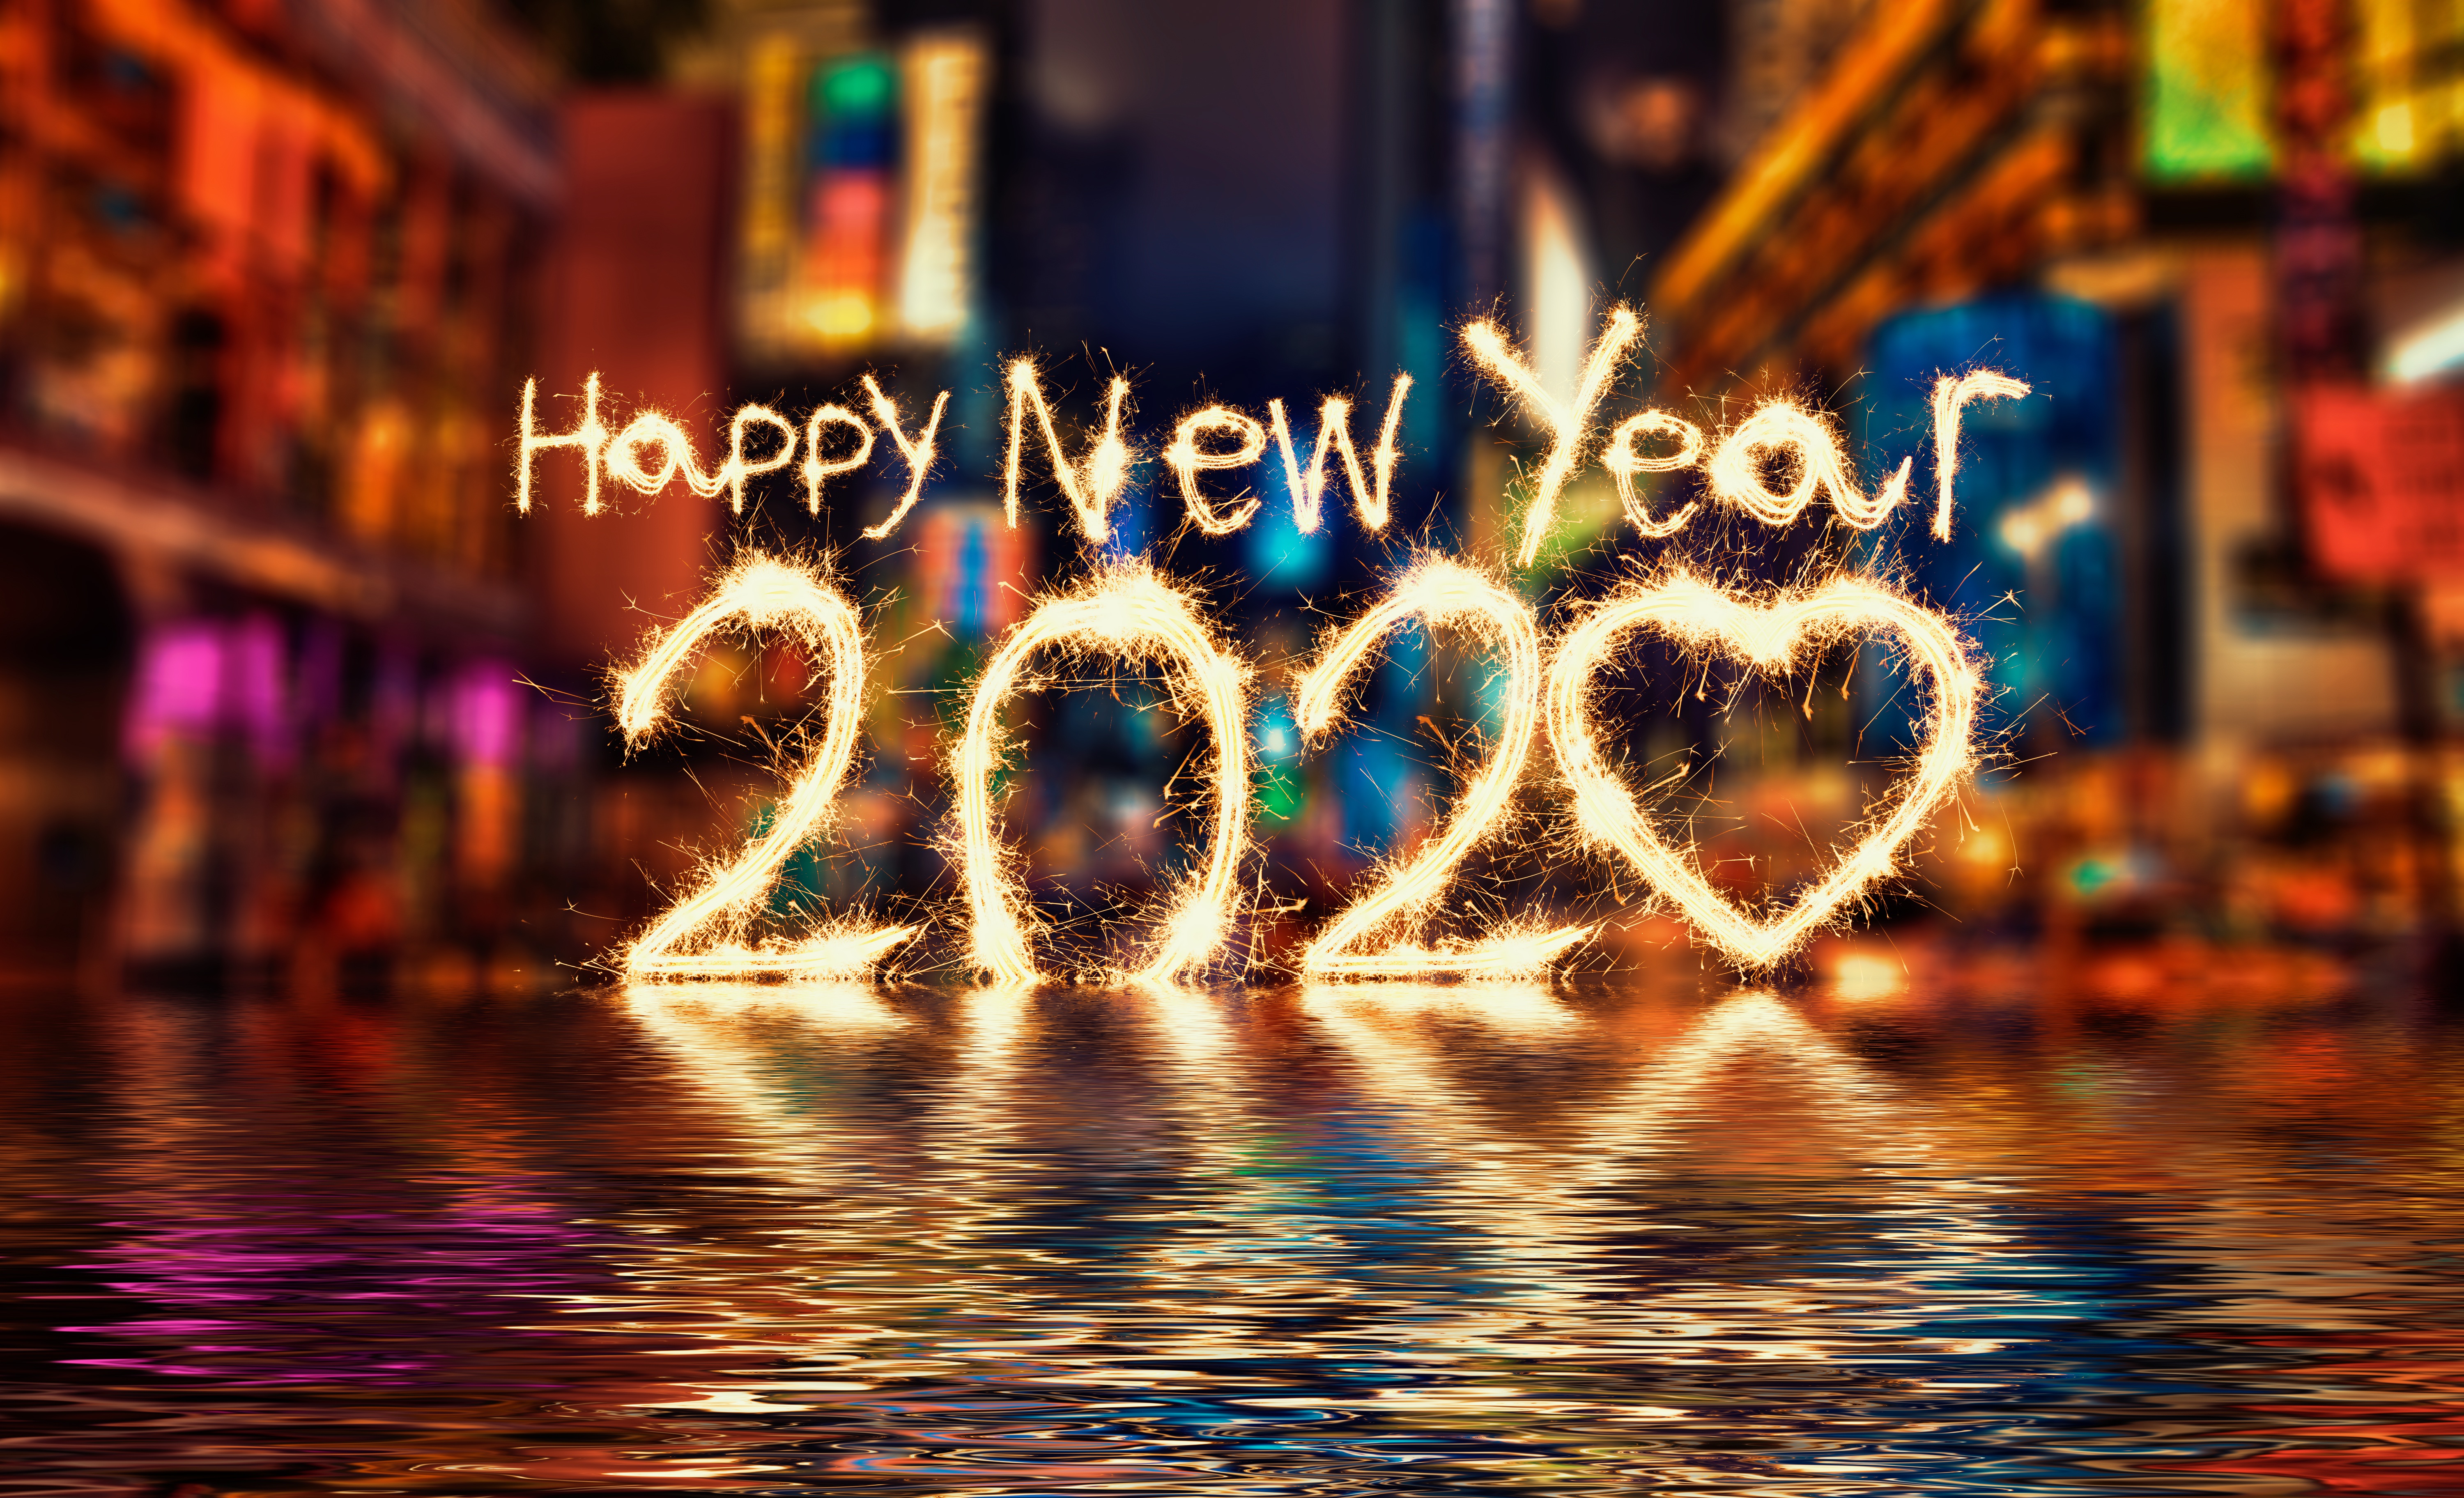 Happy New Year New Year New Year 2020 6000x3648